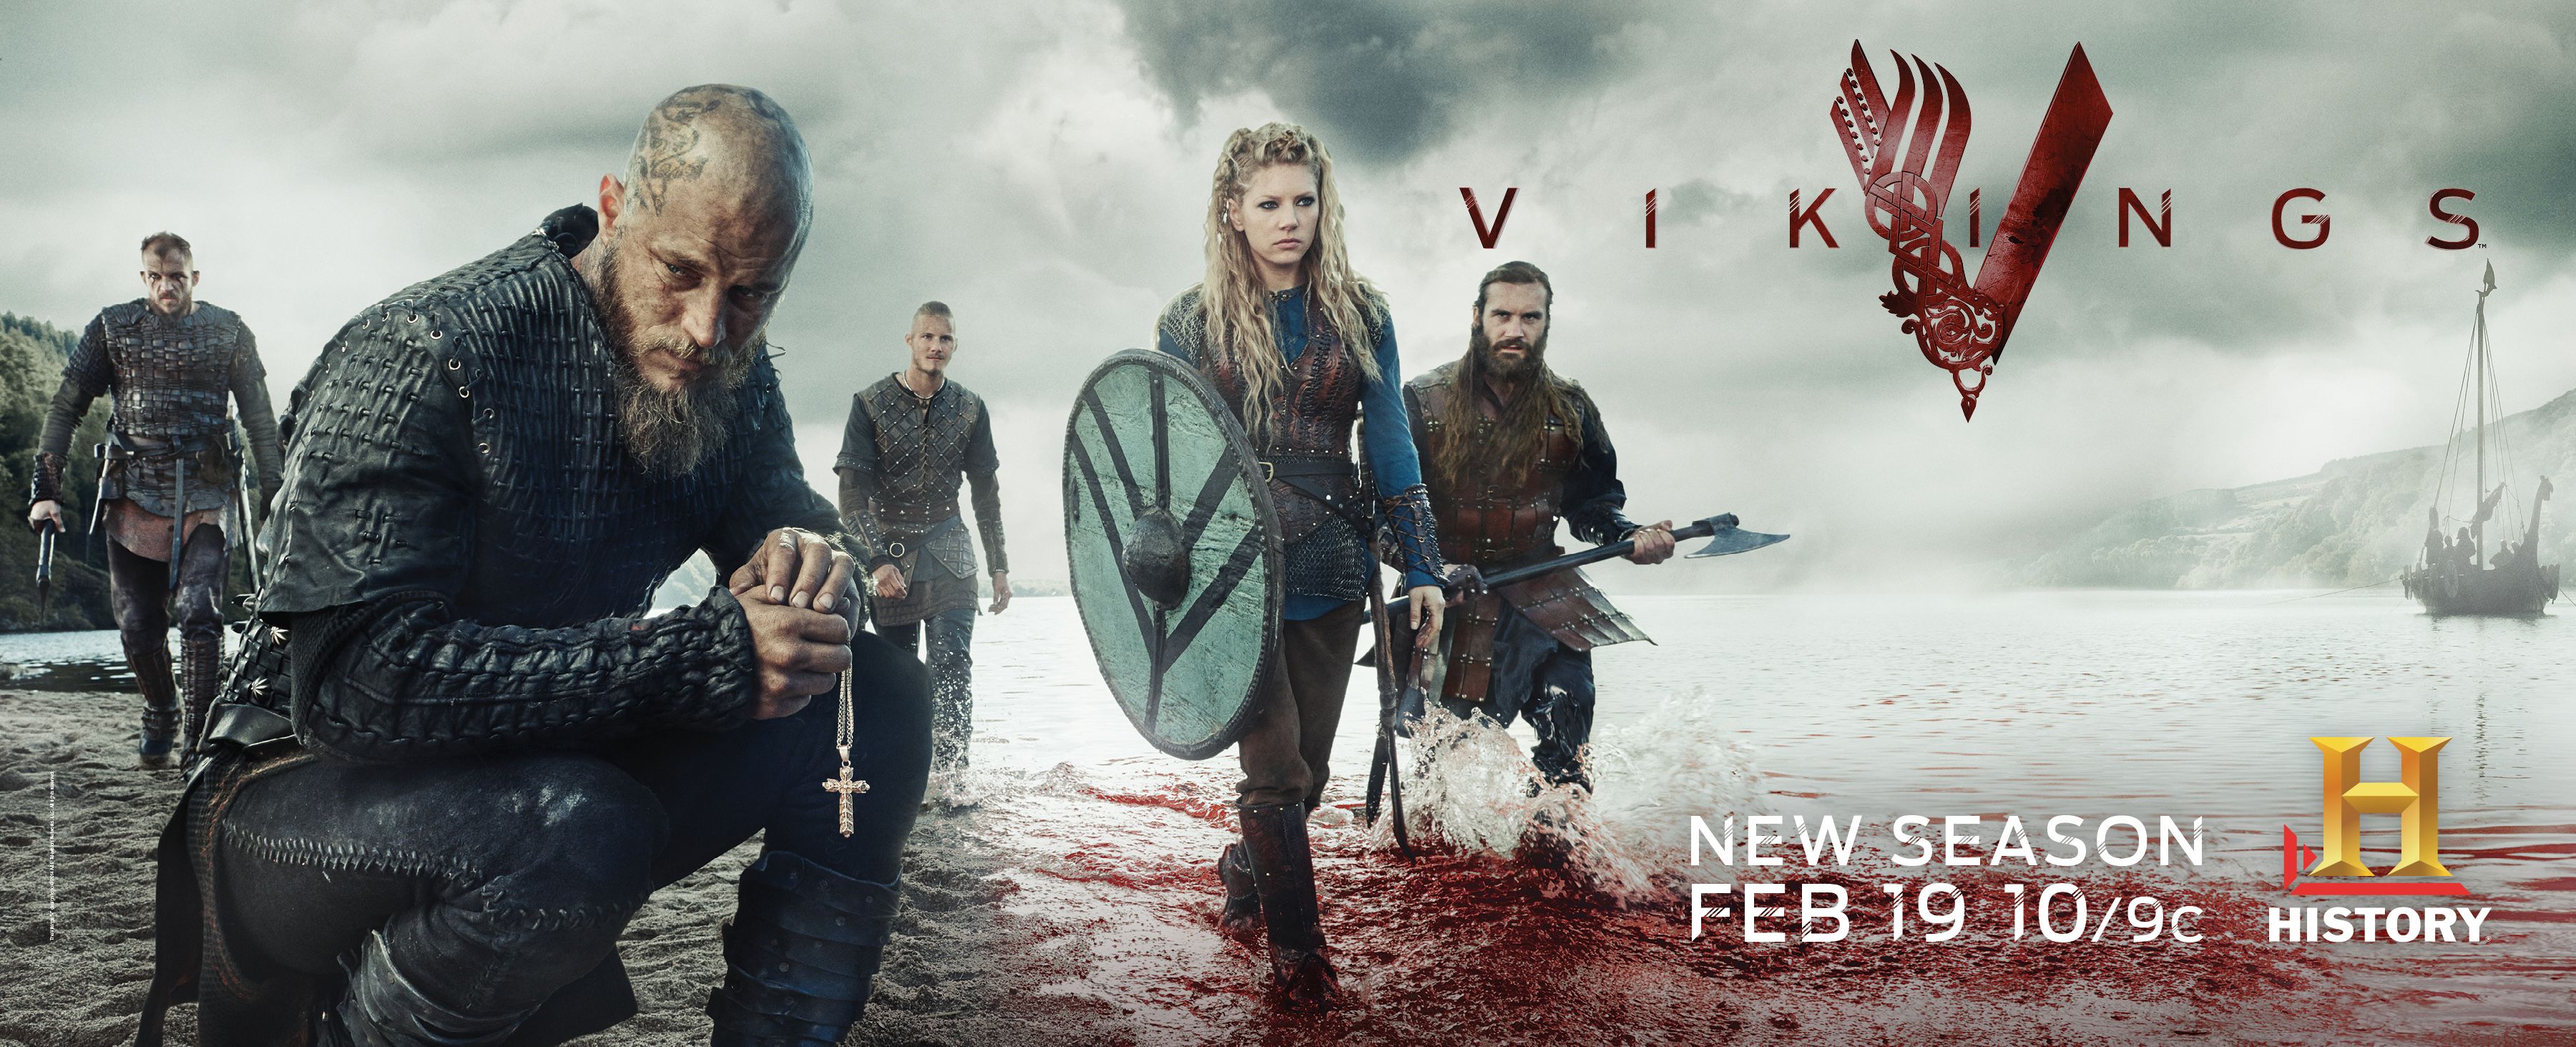 Viking Season 3 Promo Art 2